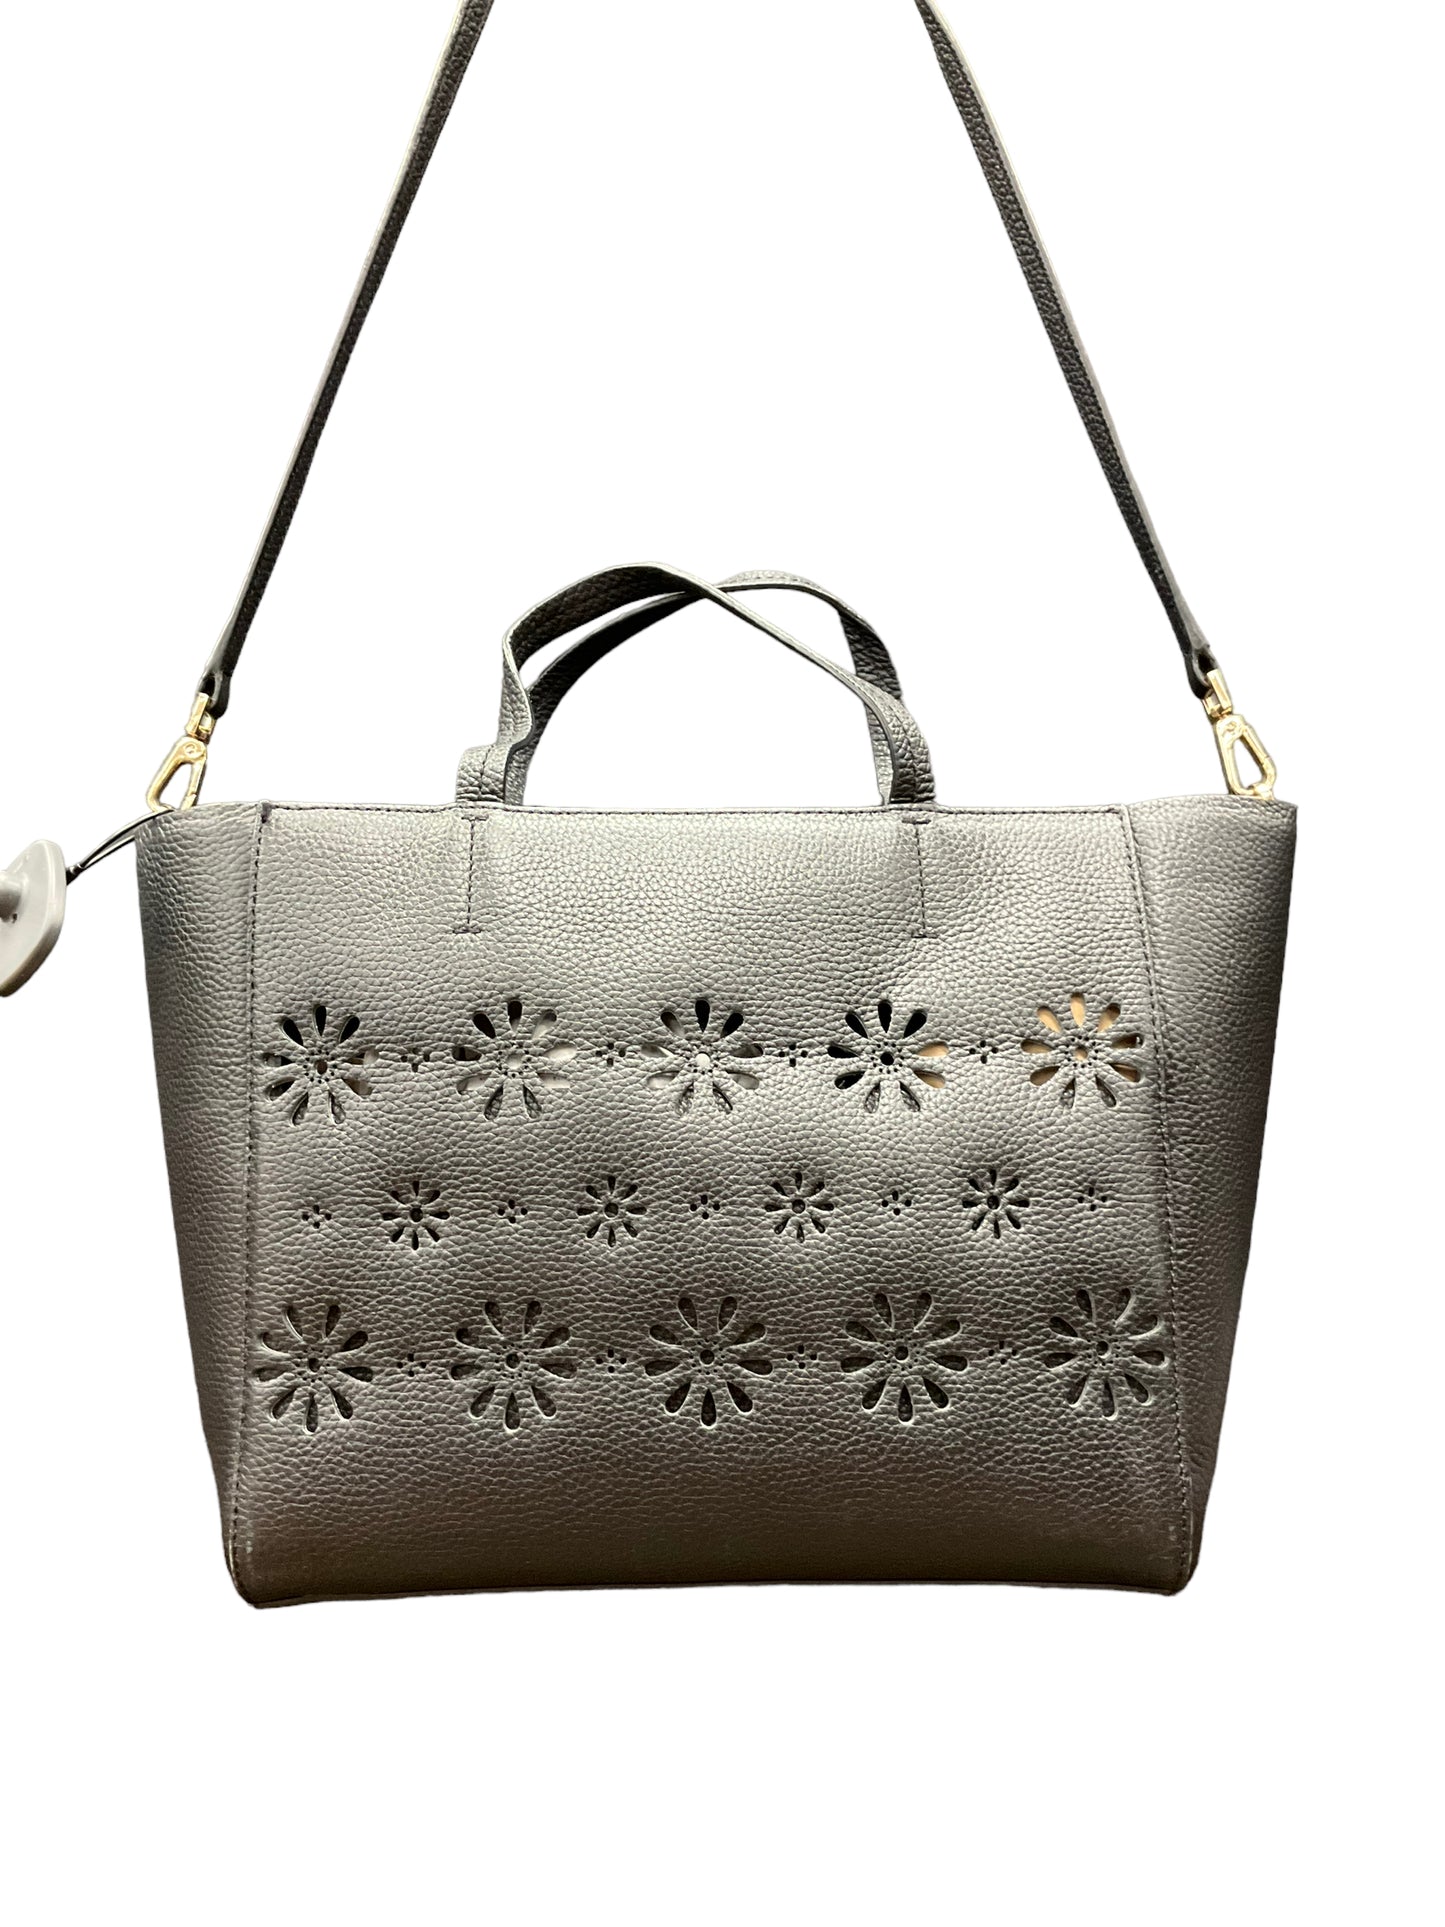 Handbag By Kate Spade  Size: Medium